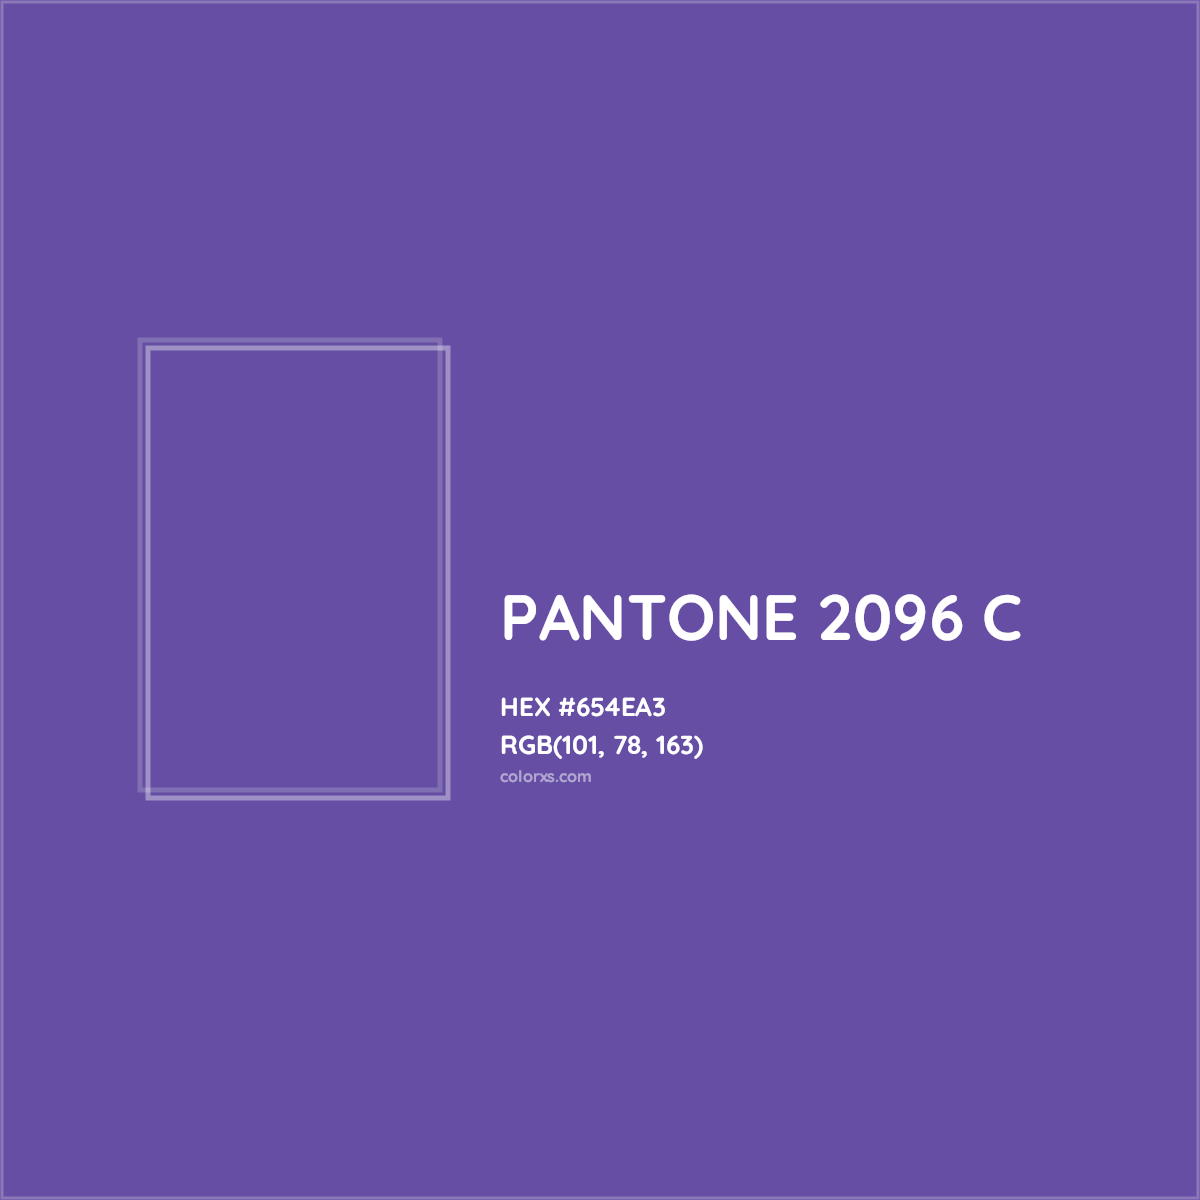 HEX #654EA3 PANTONE 2096 C CMS Pantone PMS - Color Code